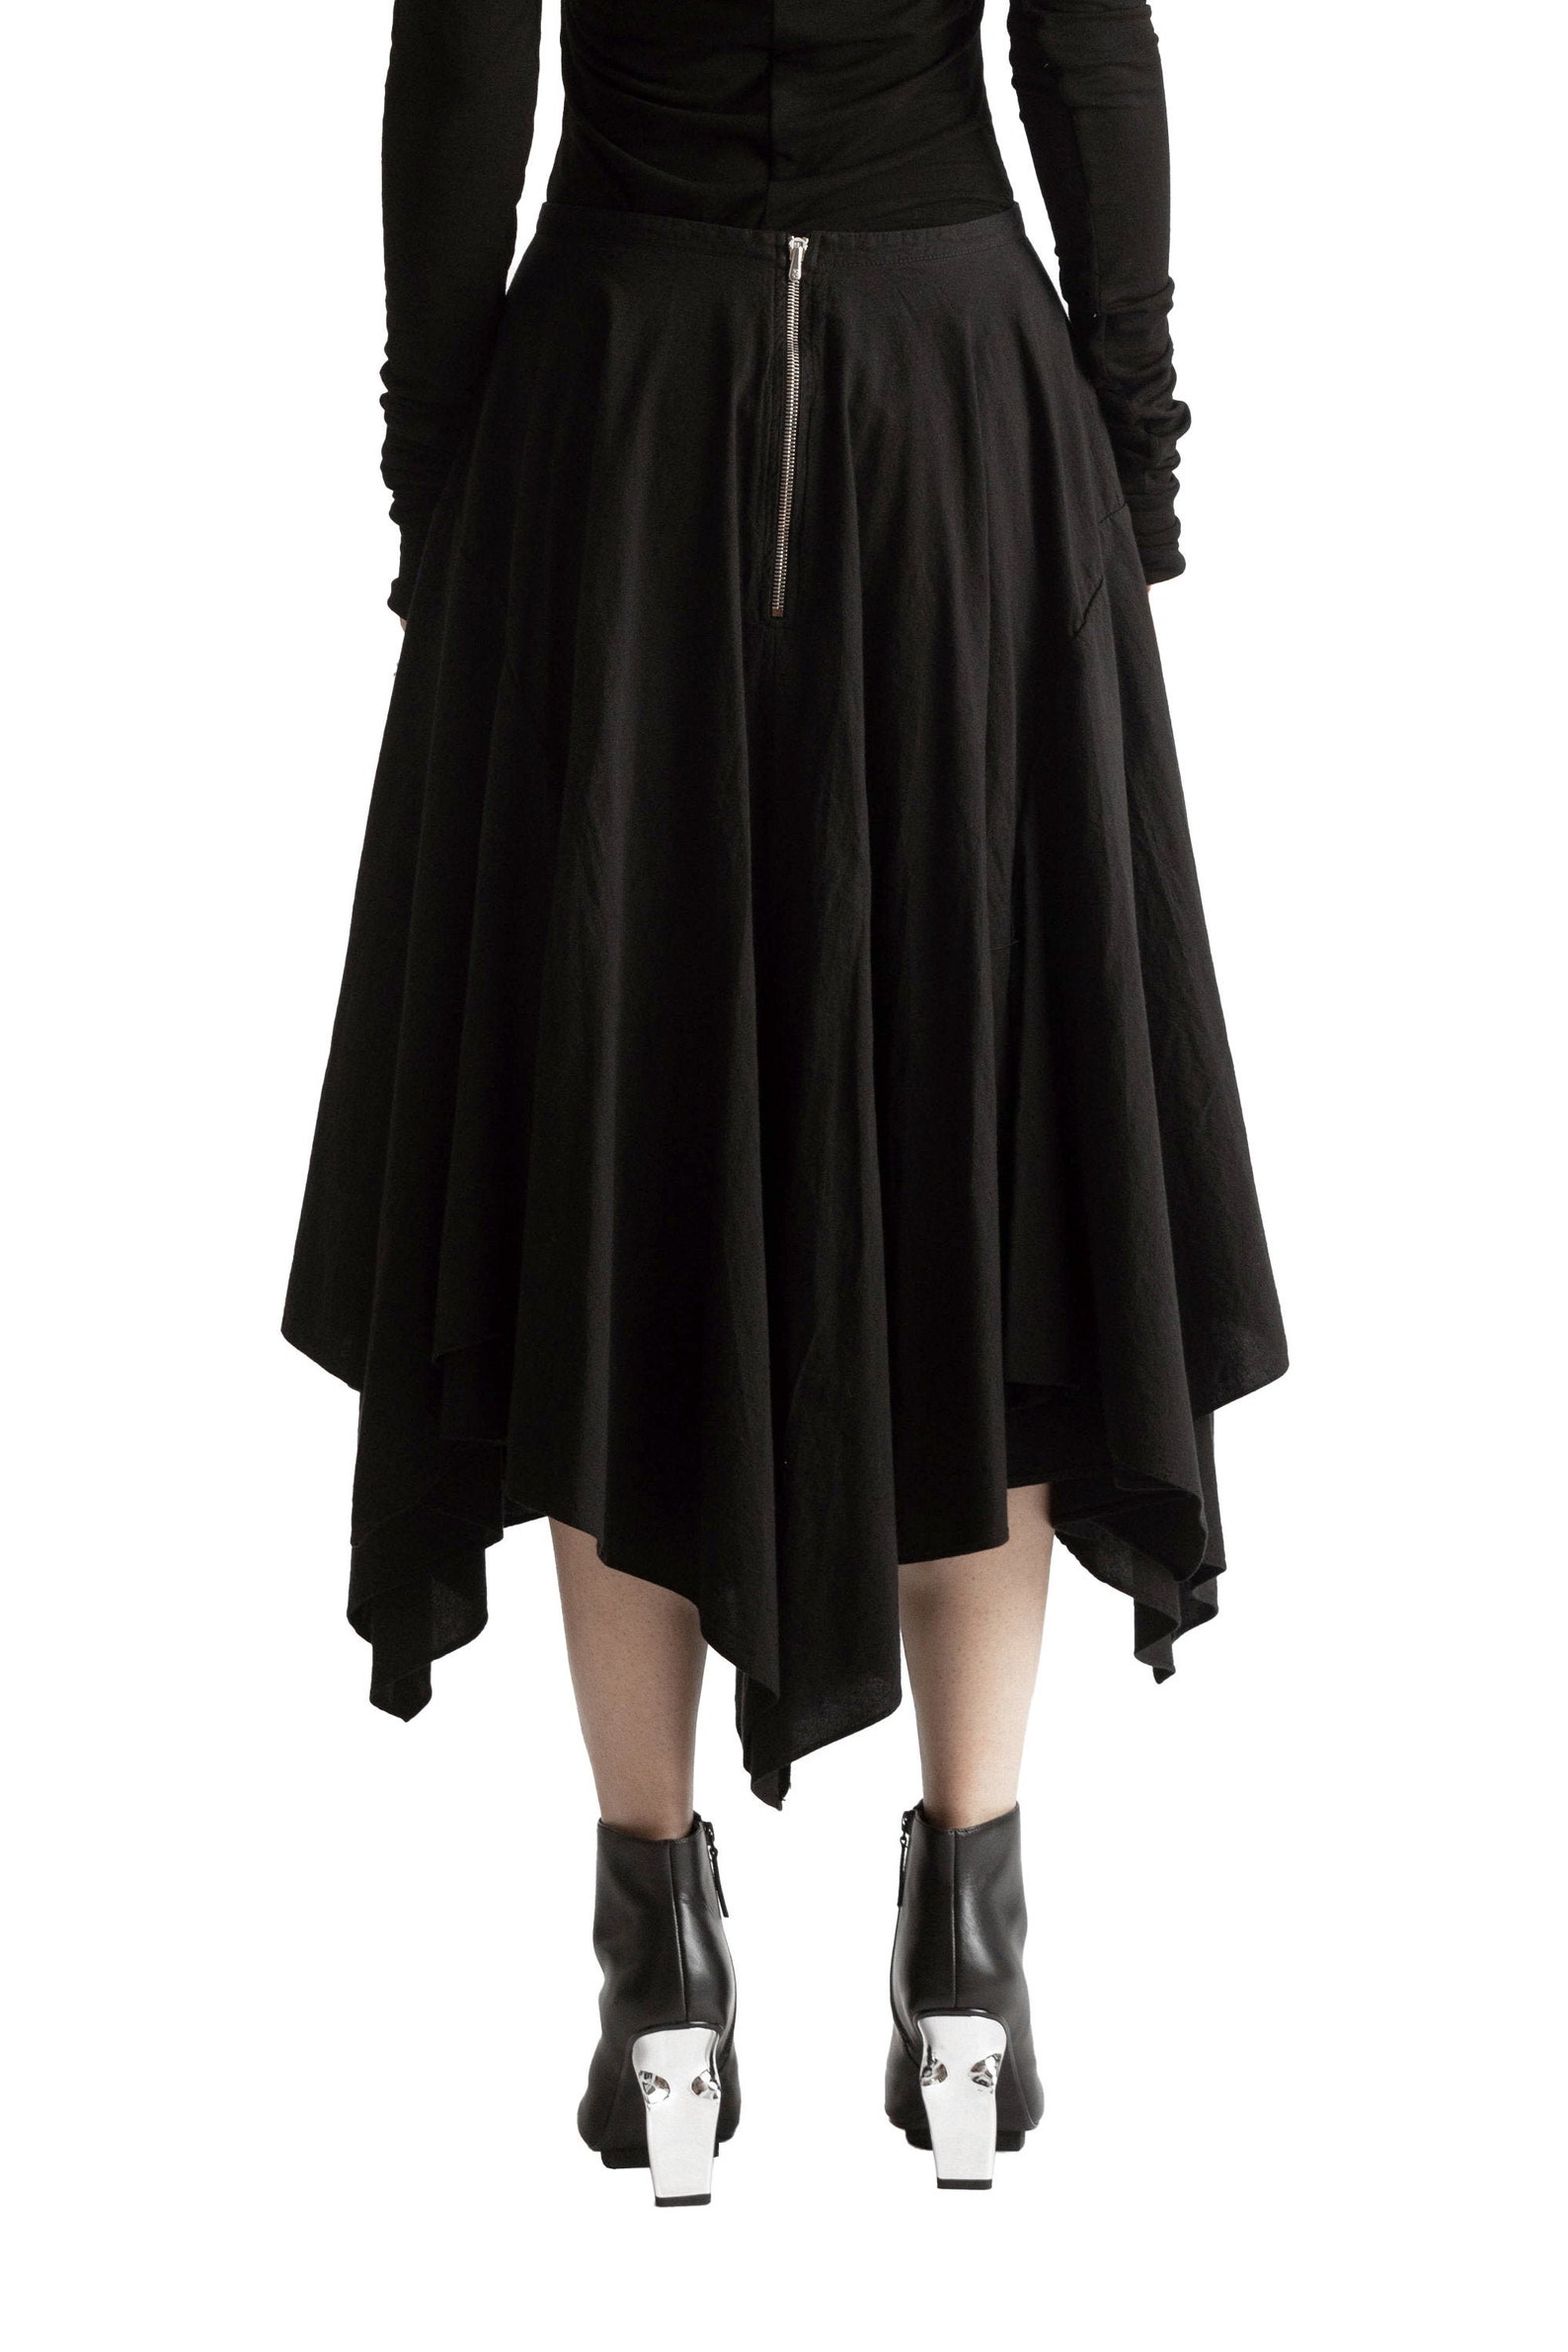 Avant Garde Black Layered Gothic Womens Skirt Dark Wear | Etsy